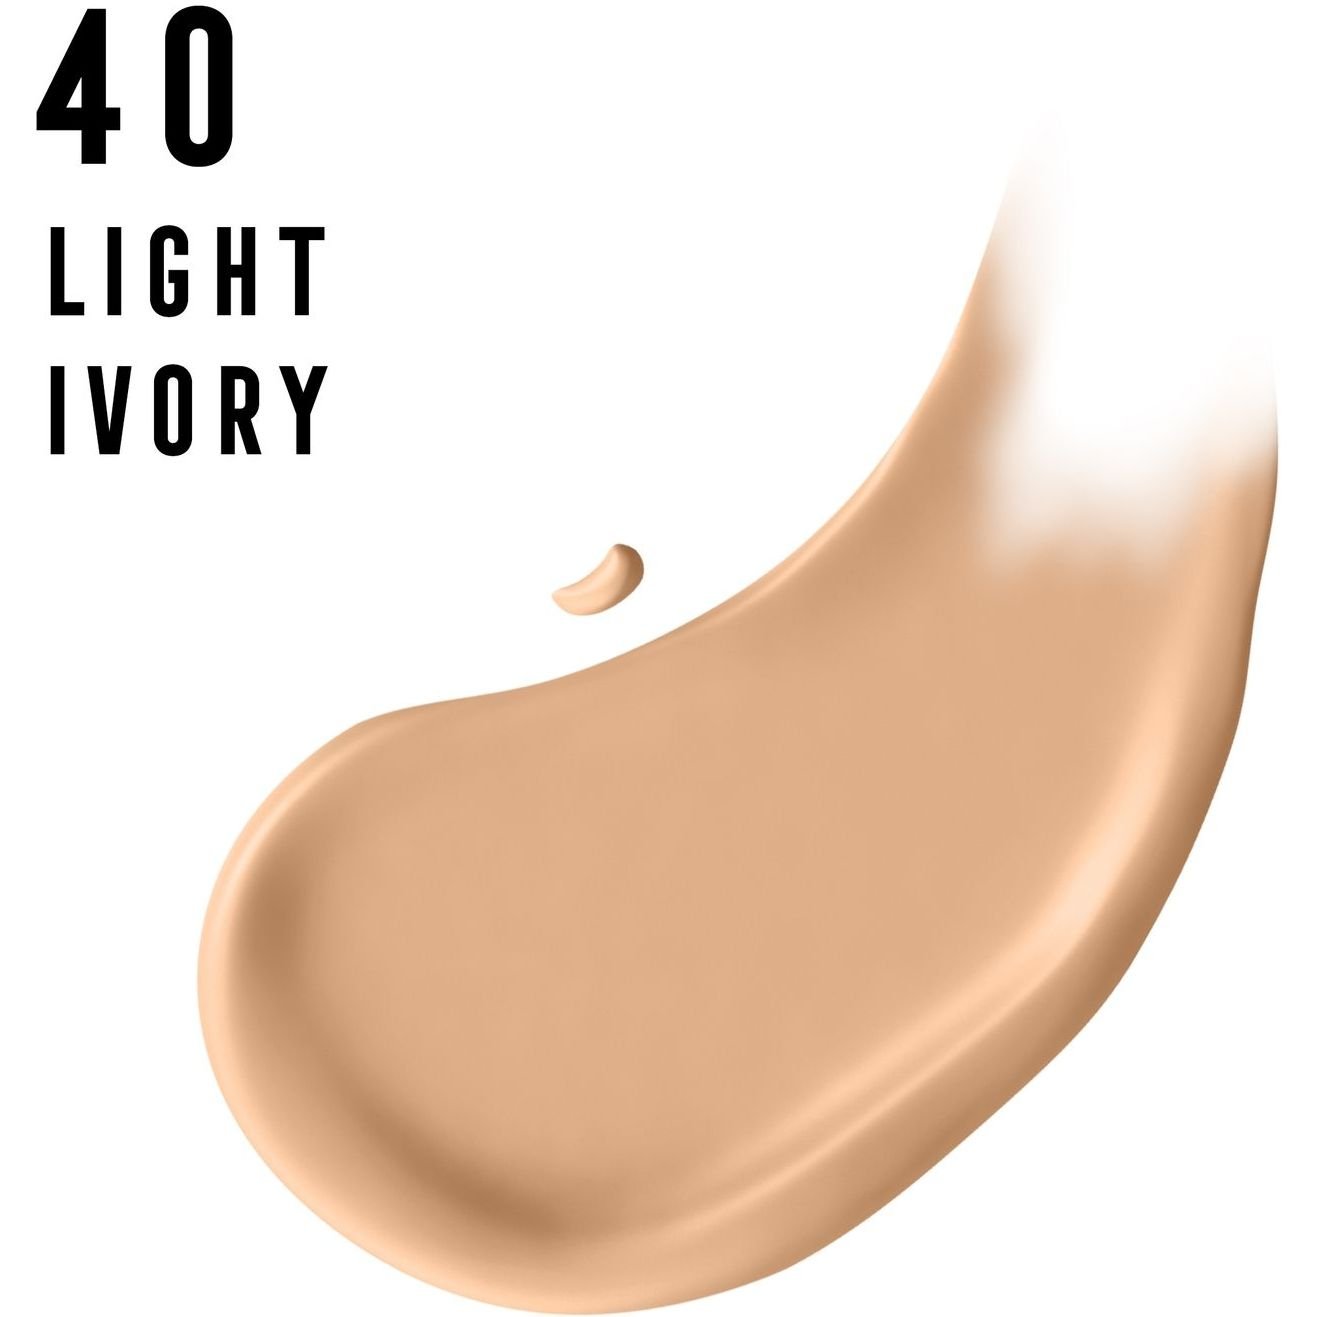 Тональная основа Max Factor Miracle Pure Skin-Improving Foundation SPF30 тон 040 (Light Ivory) 30 мл - фото 3